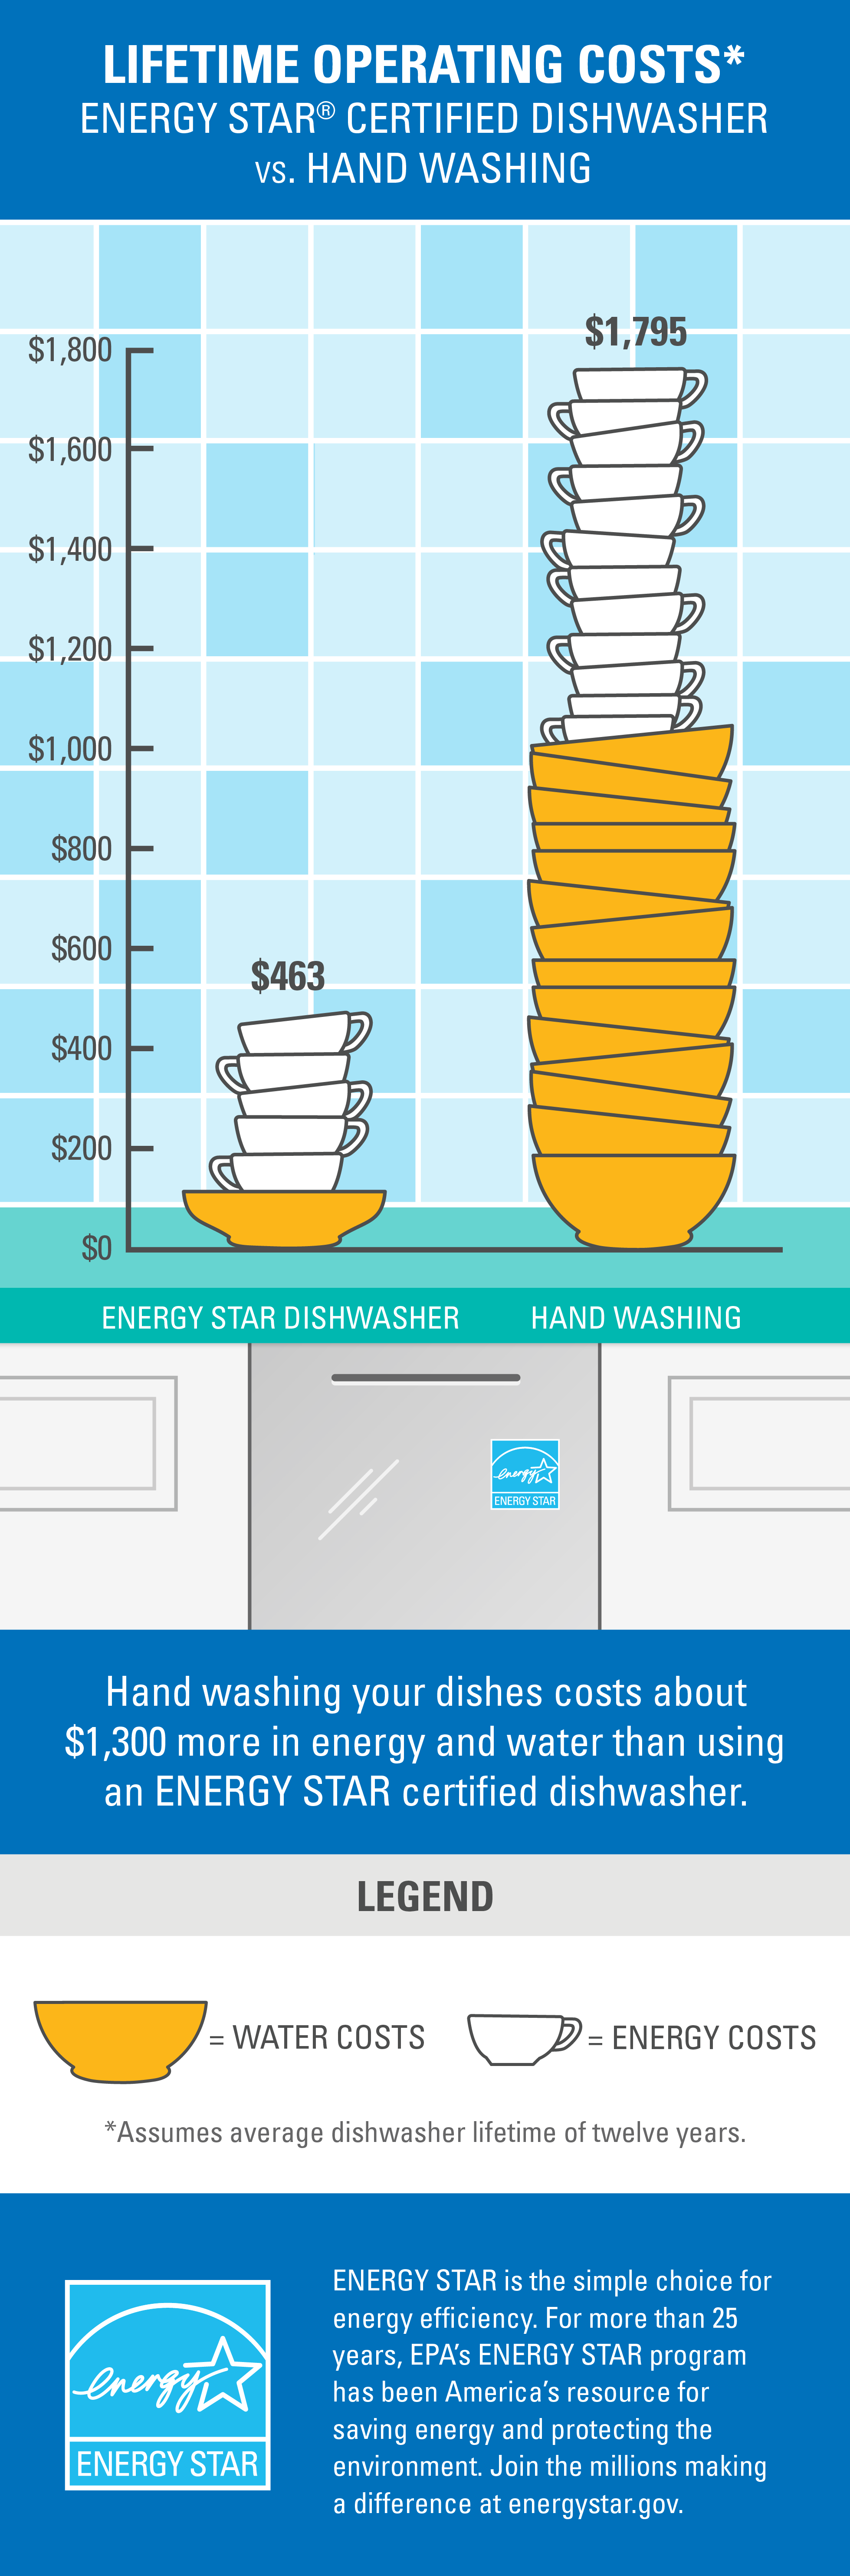 Dishwasher vs. Hand Washing Dishes